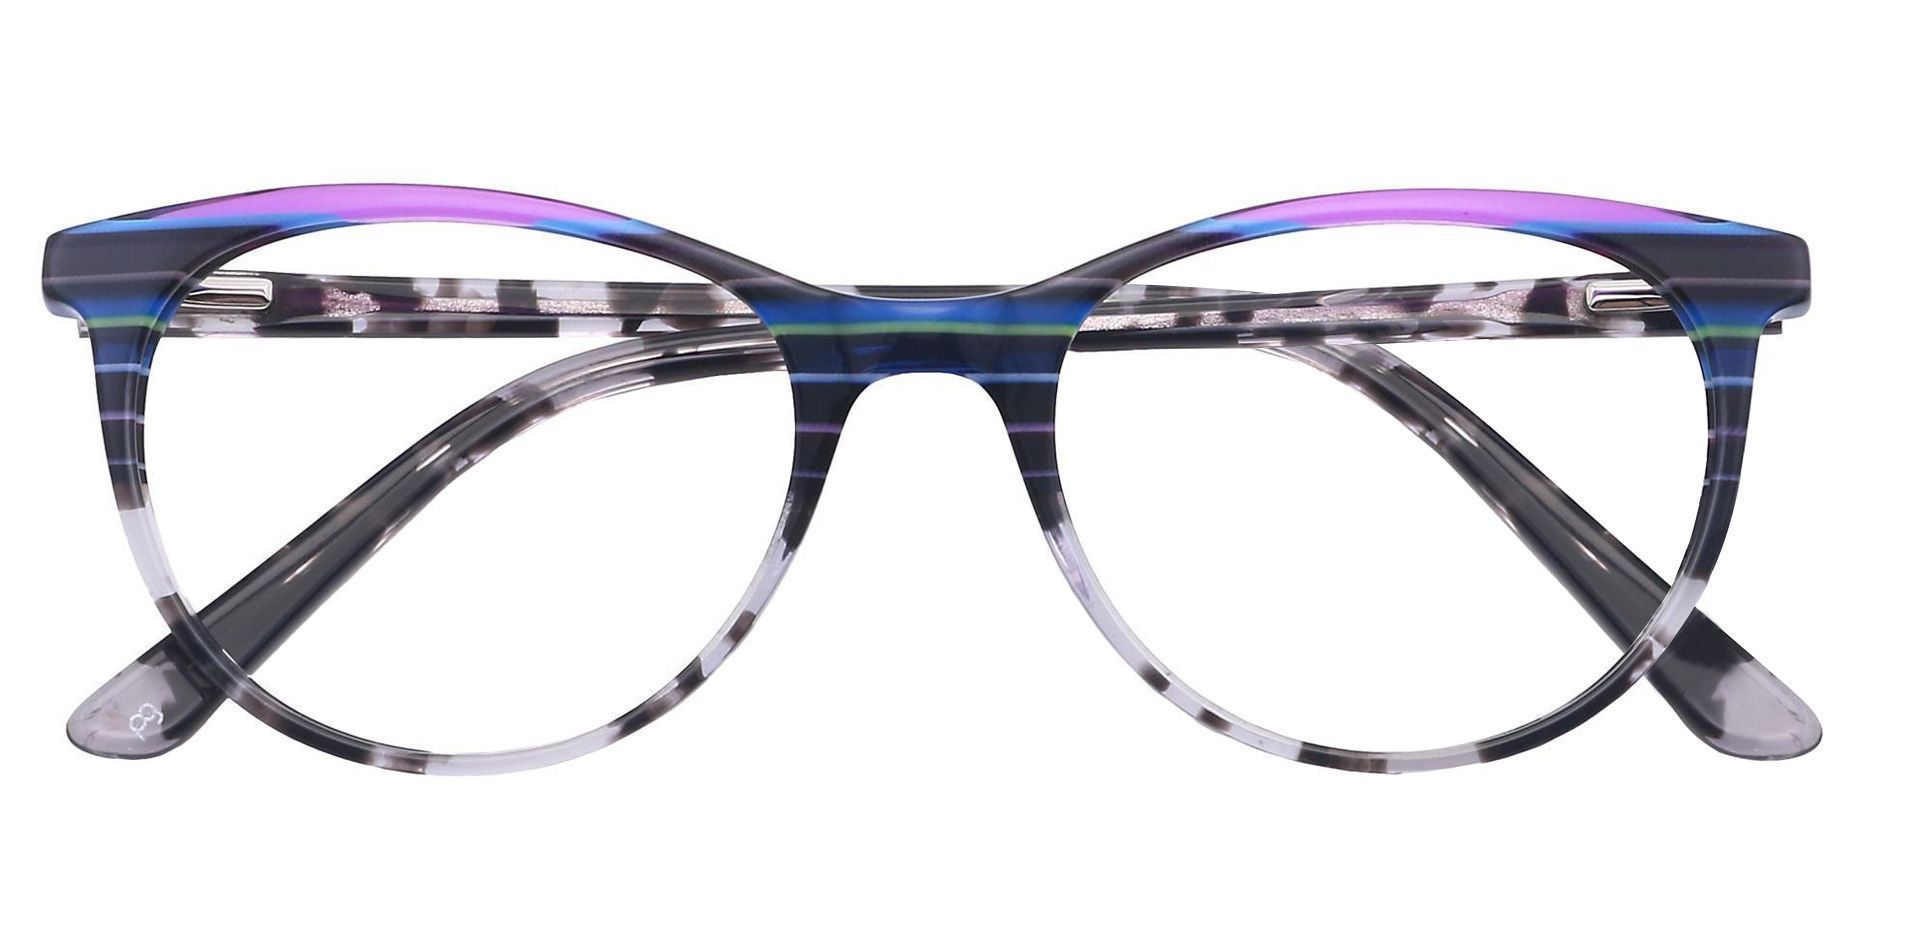 Patagonia Oval Reading Glasses - Multicolored Blue Stripes  Multicolor